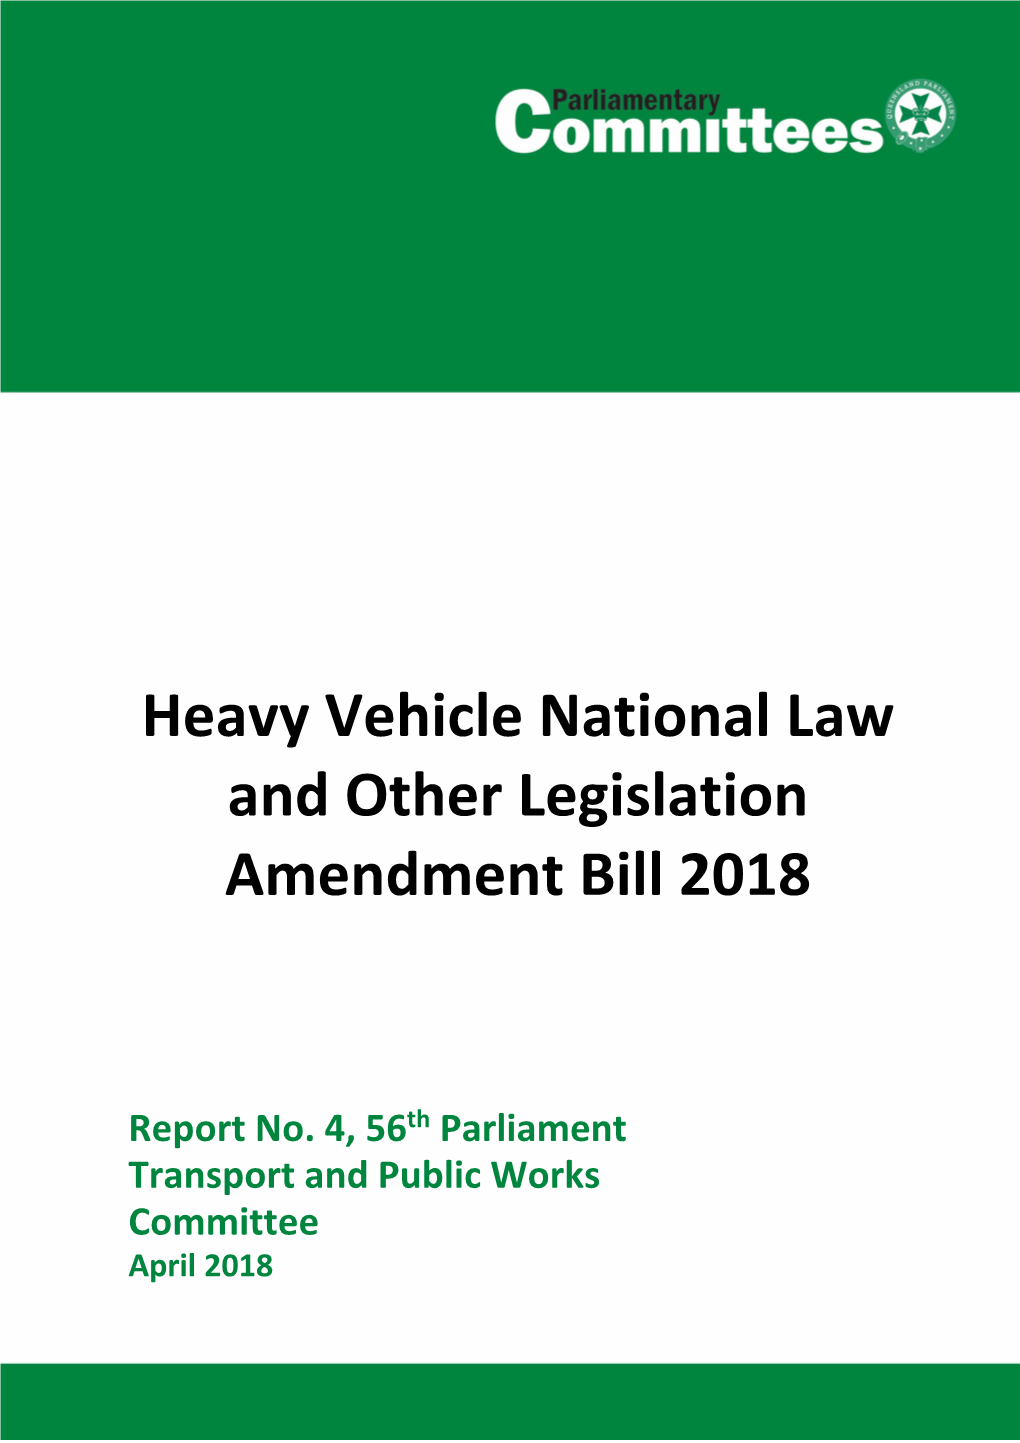 Heavy Vehicle National Law and Other Legislation Amendment Bill 2018